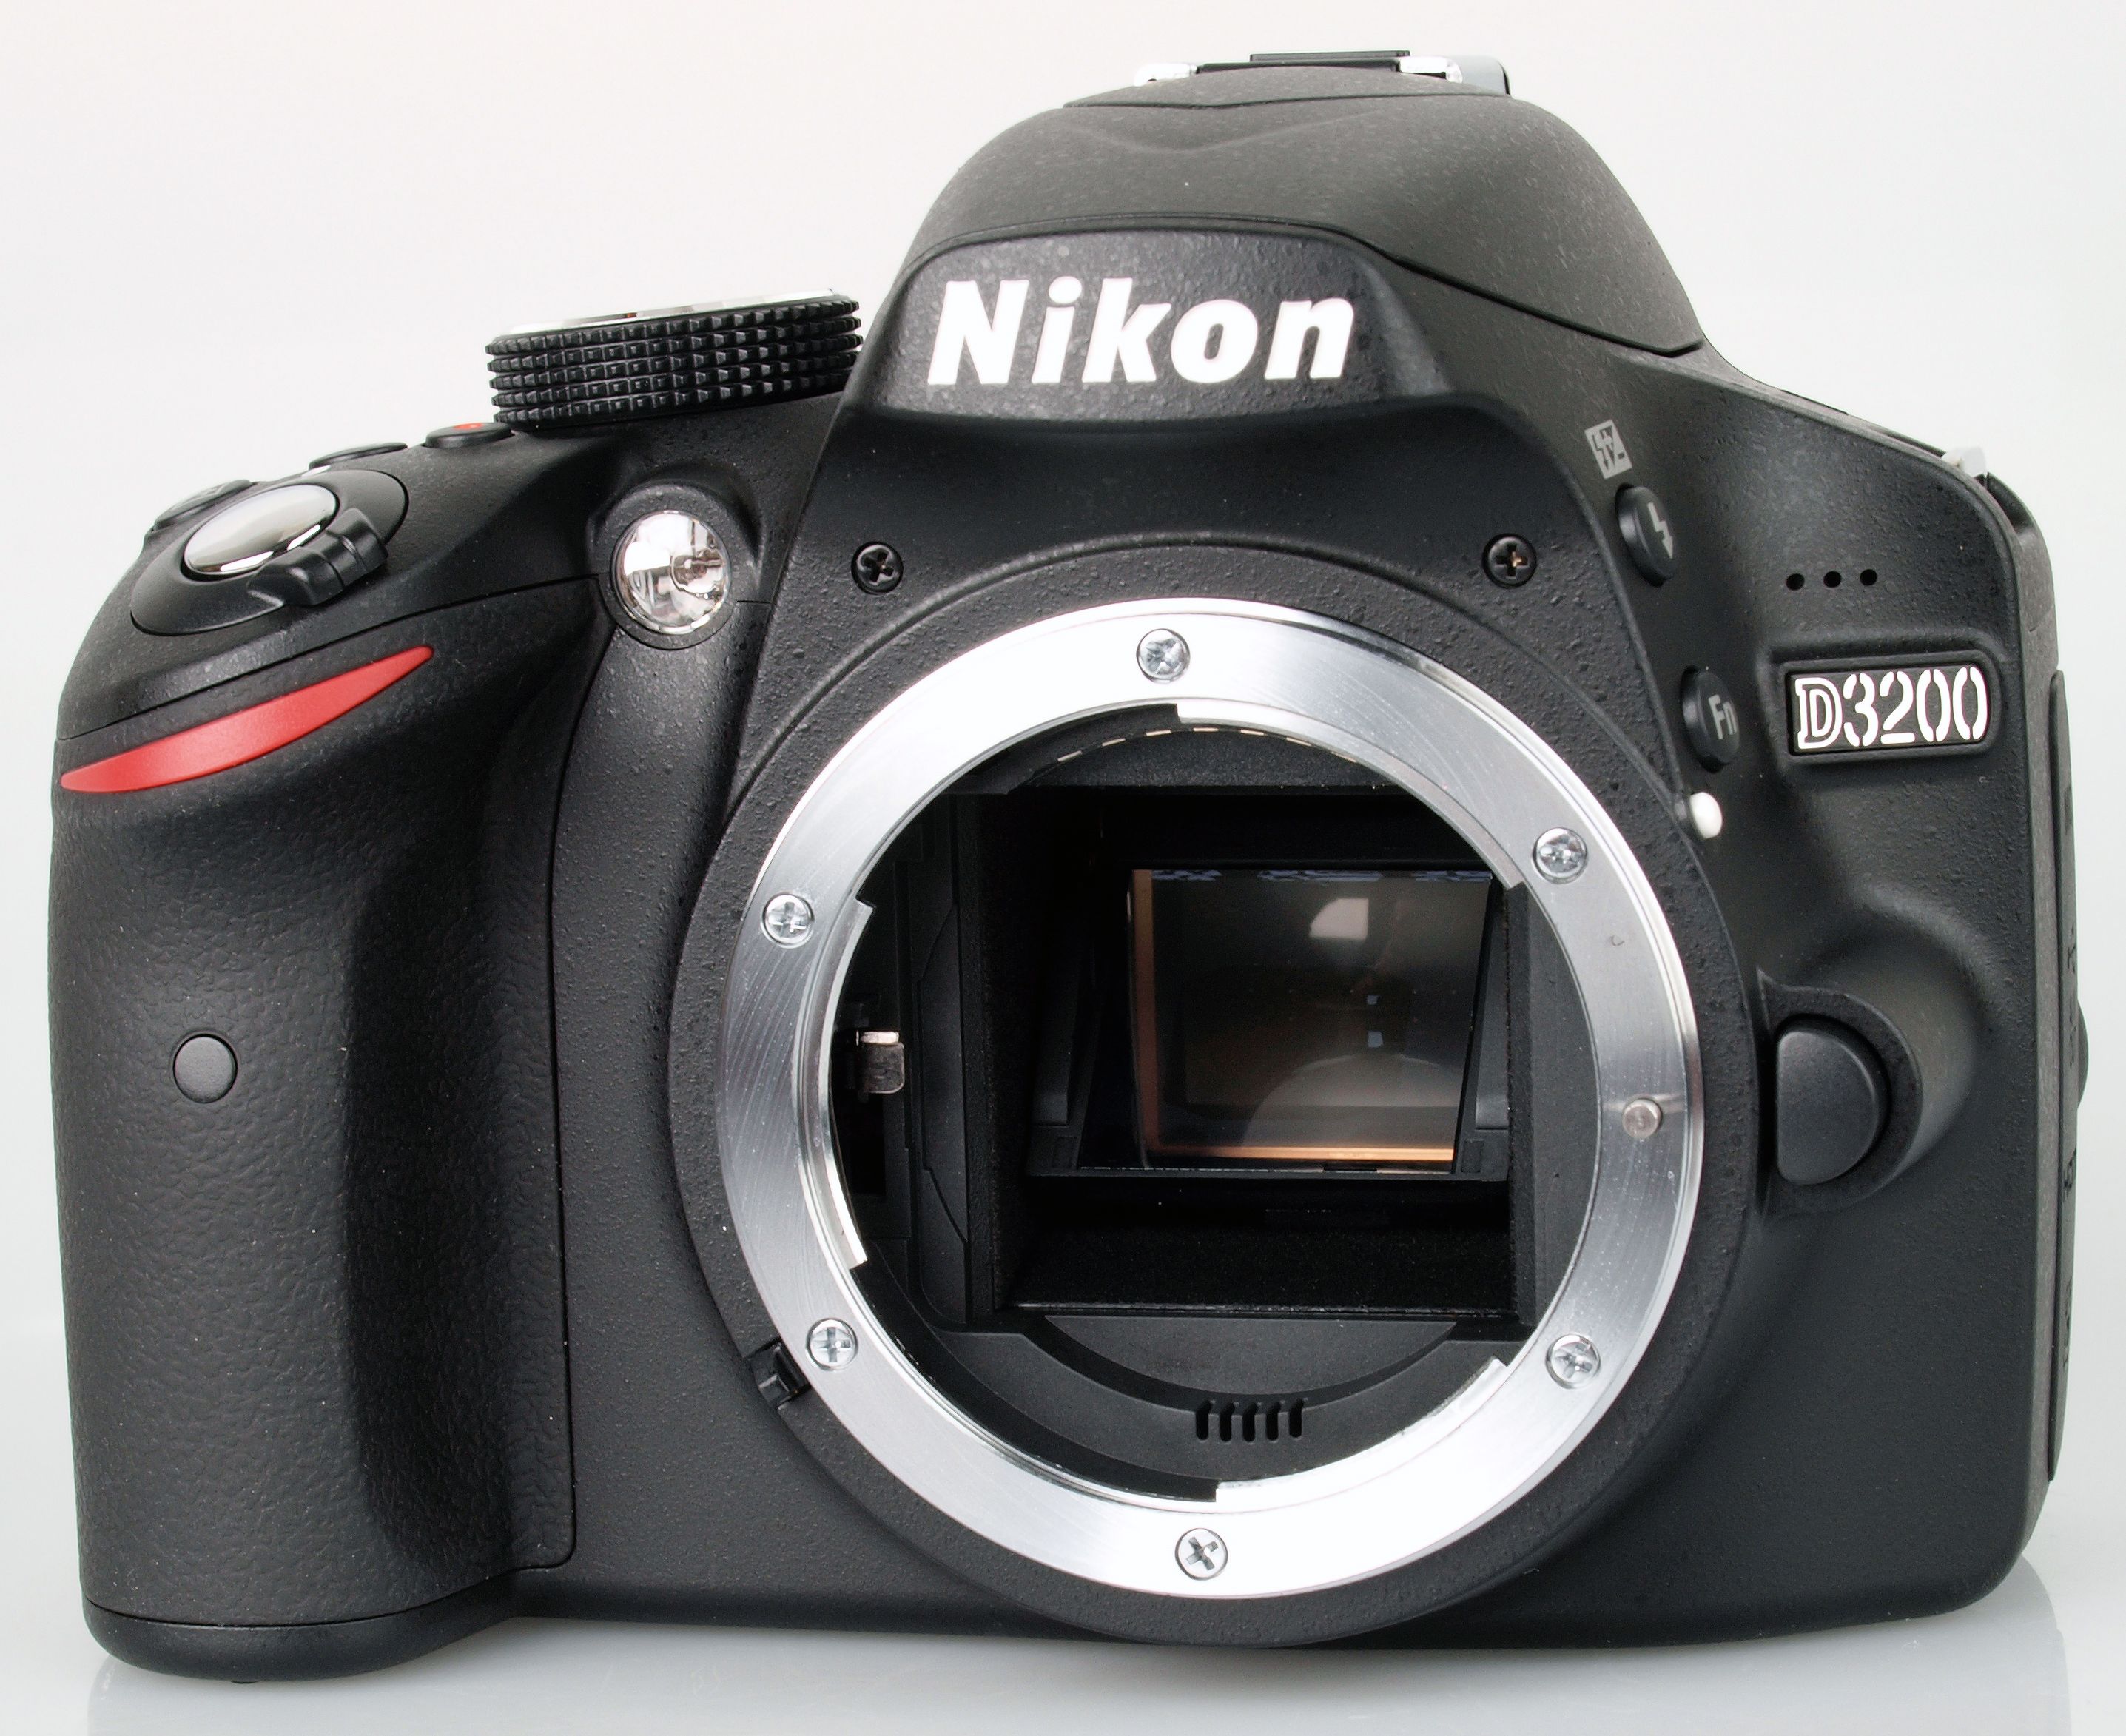 Review of the Nikon D3200. Test the camera Nikon D3200